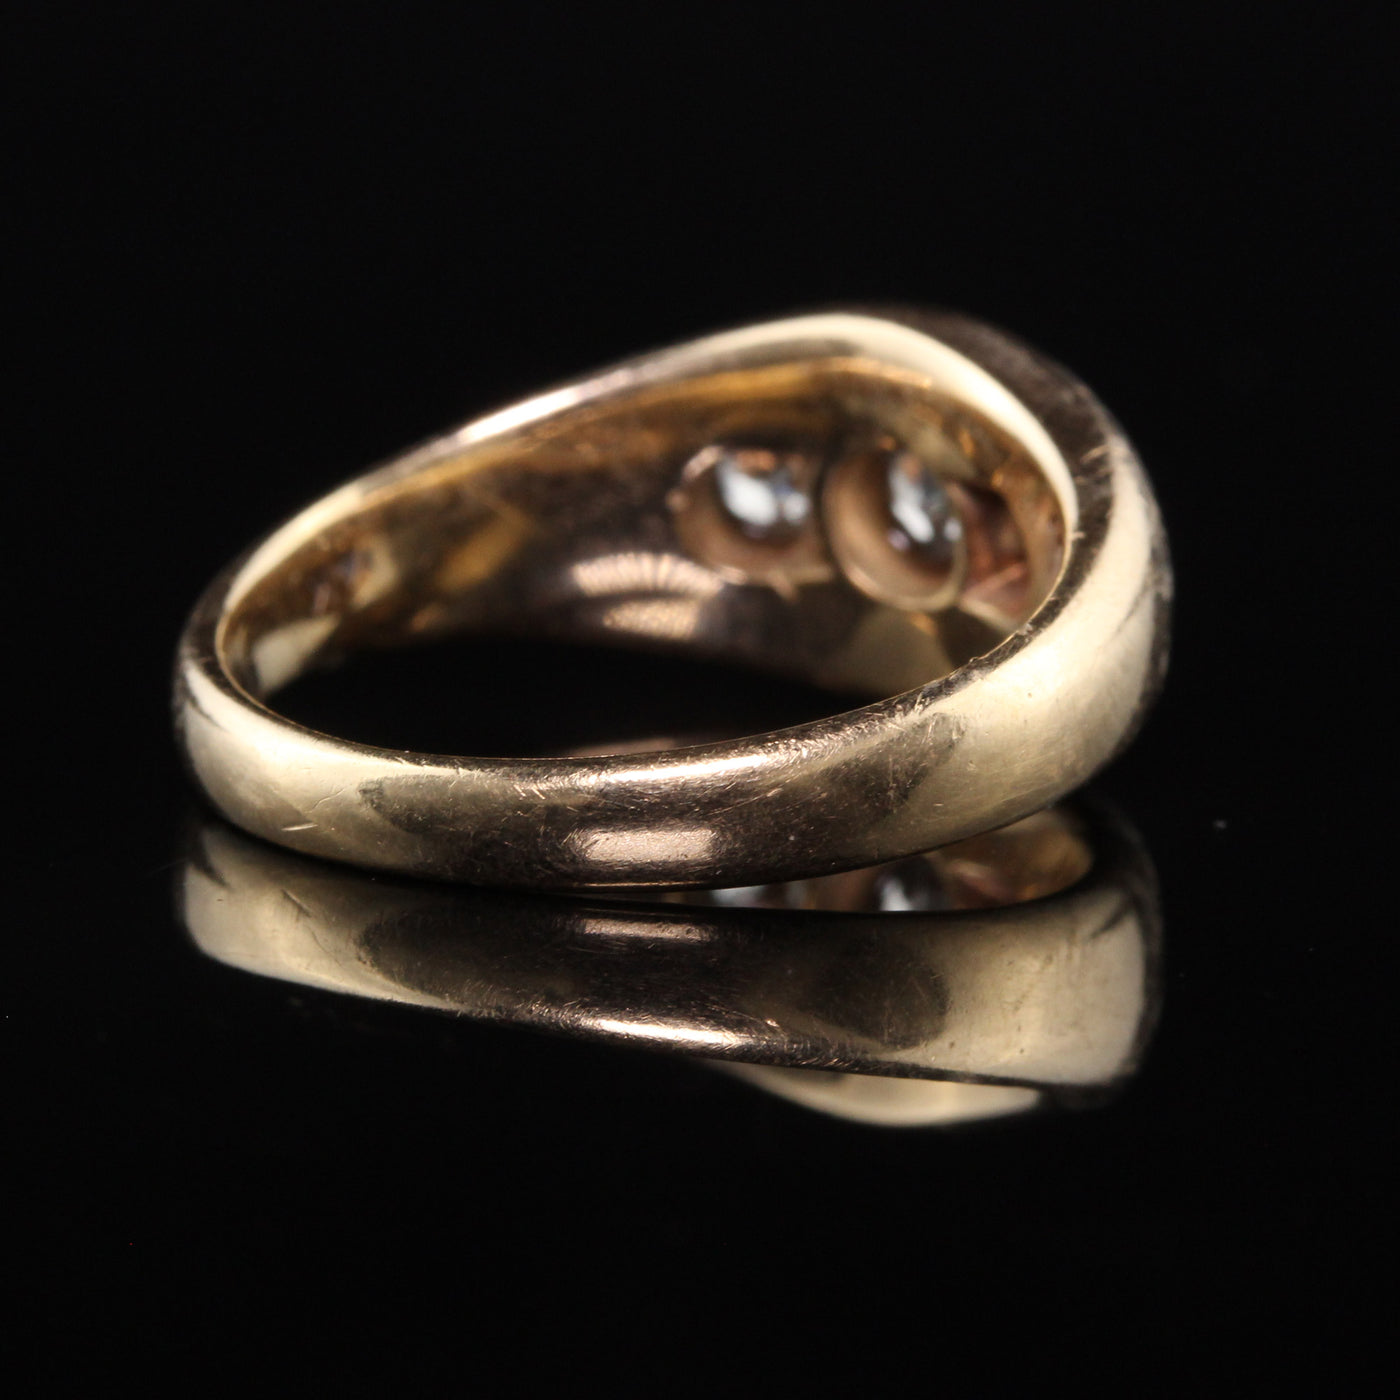 Antique Victorian 14K Yellow Gold Old Mine Cut Diamond Three Stone Gypsy Ring